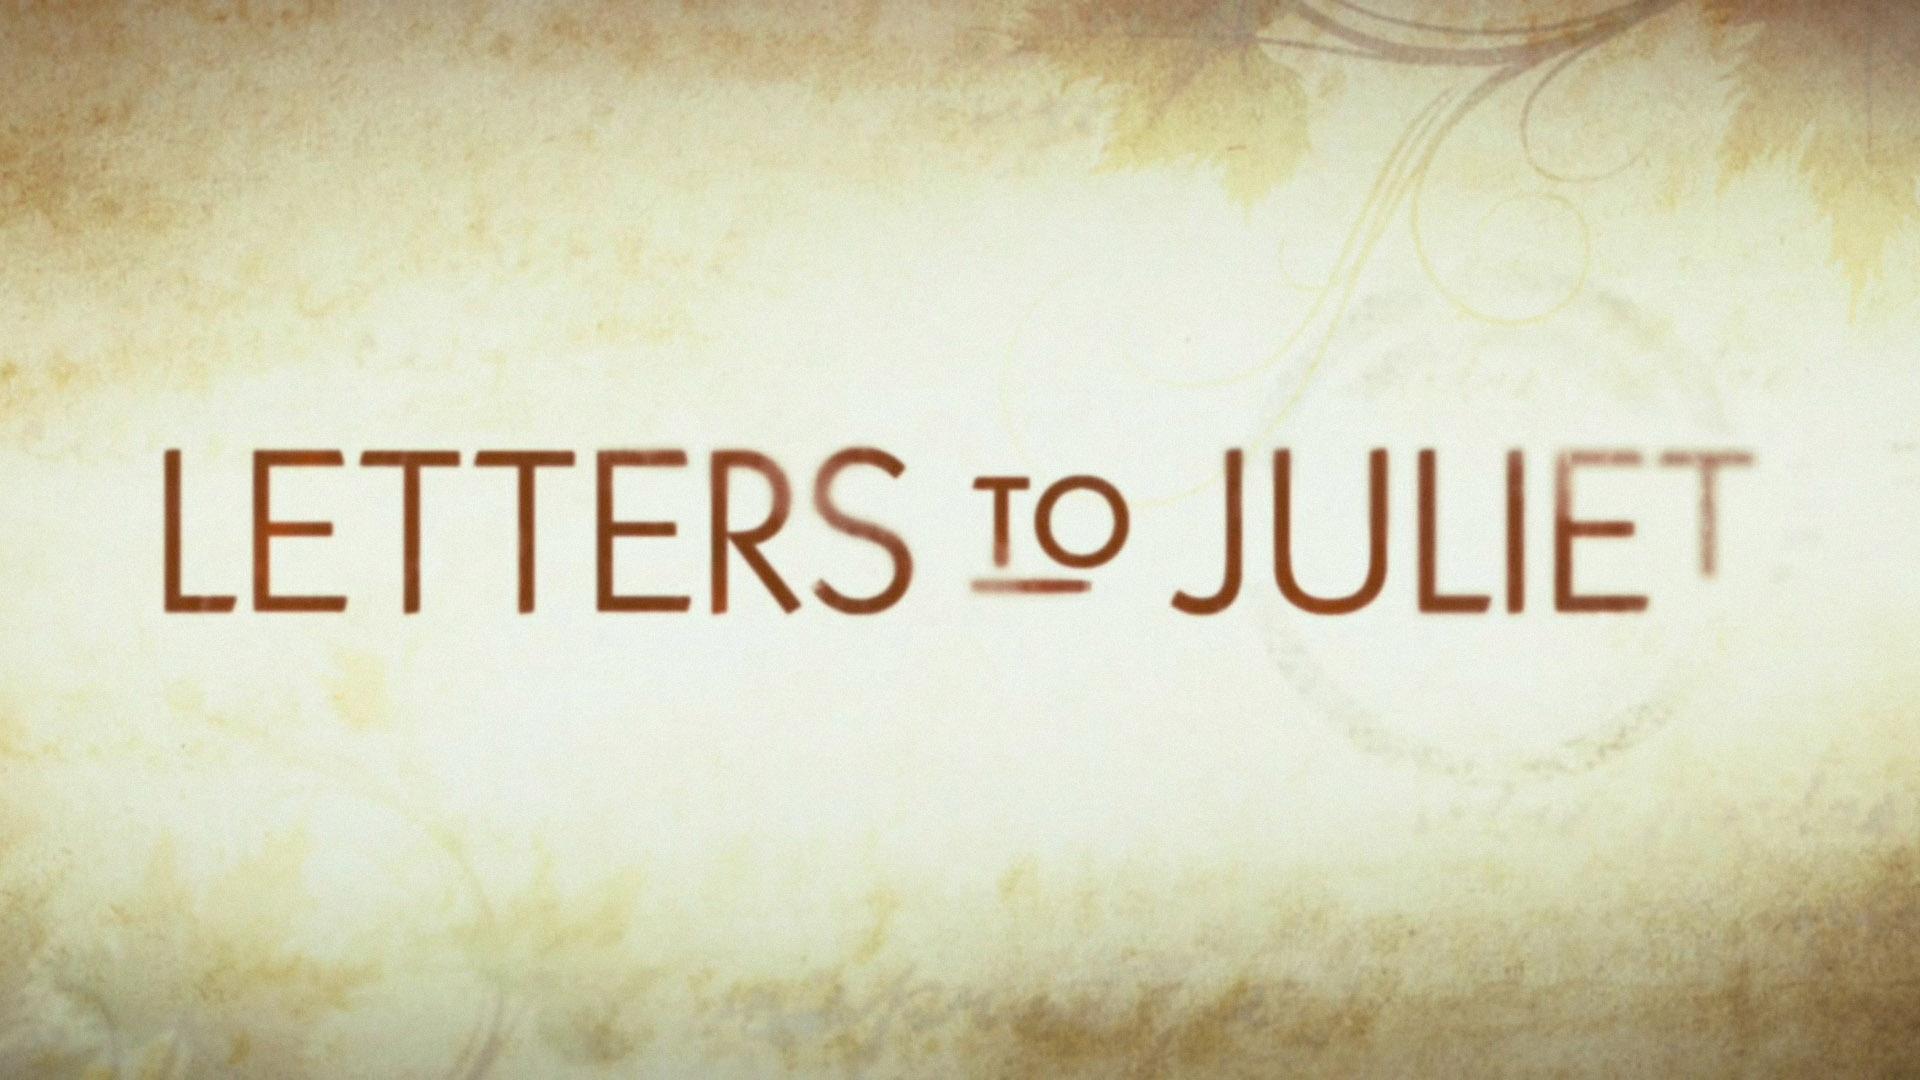 Free download Letters Wallpaper Letter to juliet wallpaper